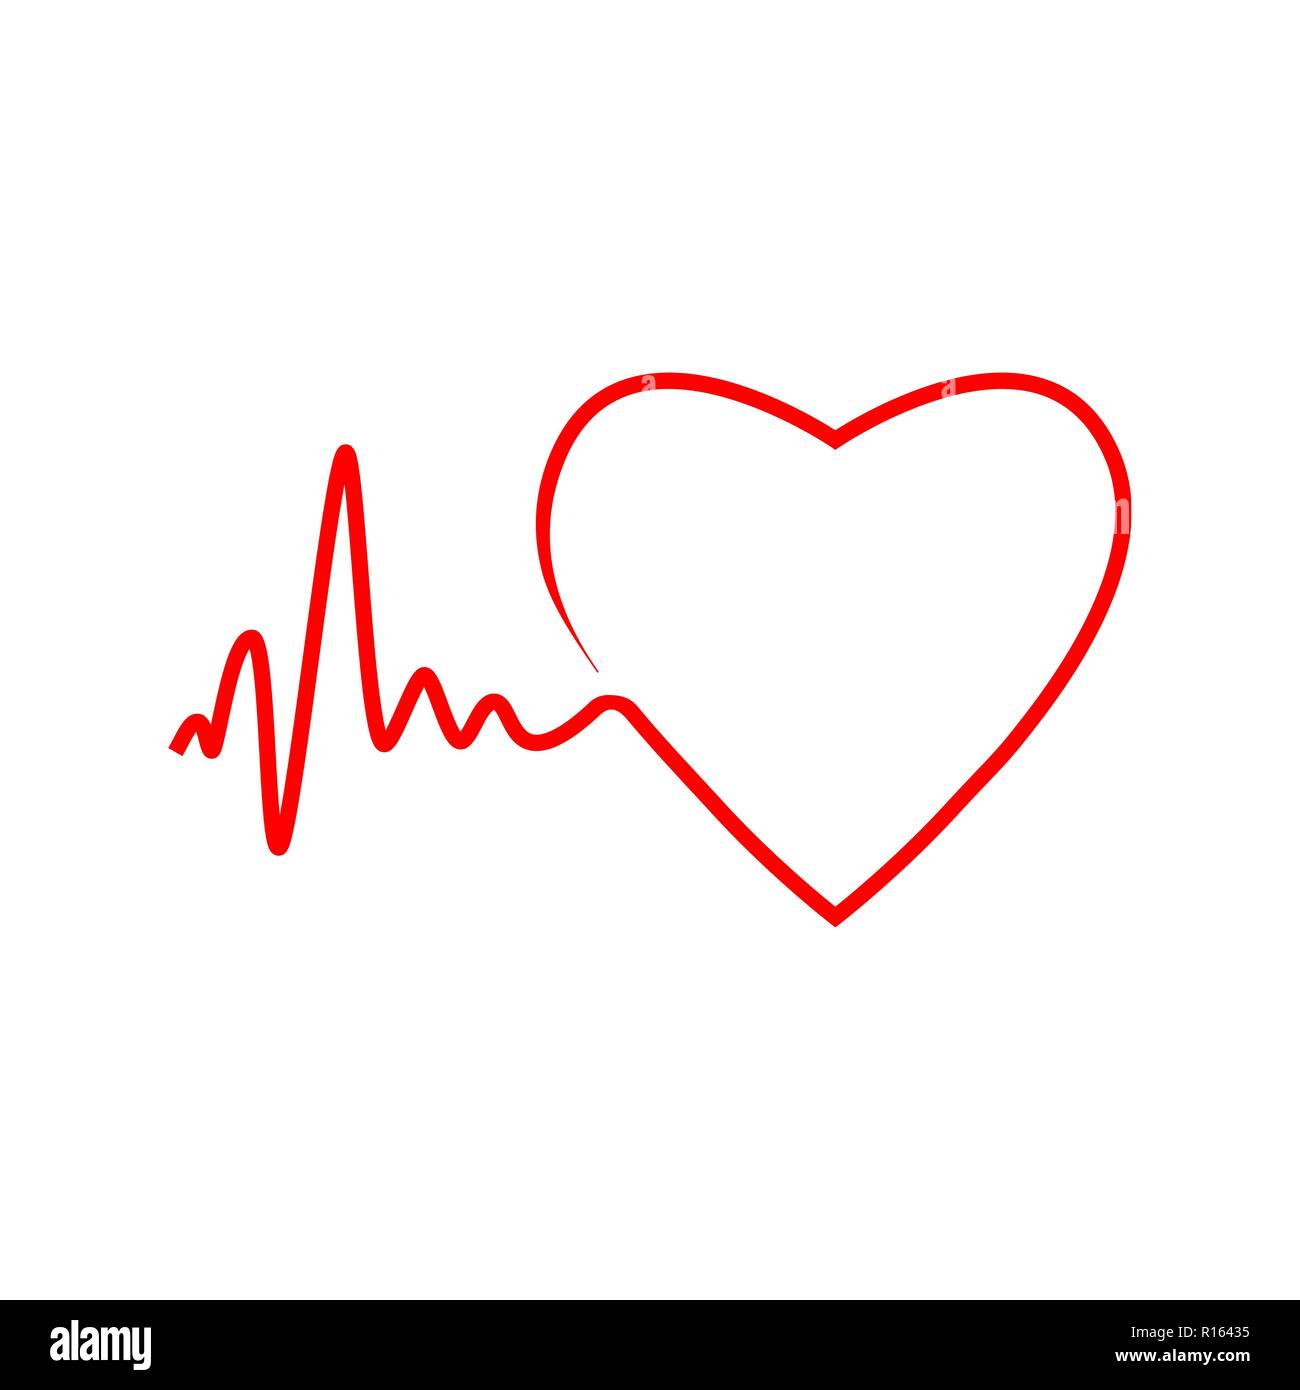 https://c8.alamy.com/comp/R16435/cardio-heart-heart-beat-icon-vector-illustration-flat-design-R16435.jpg